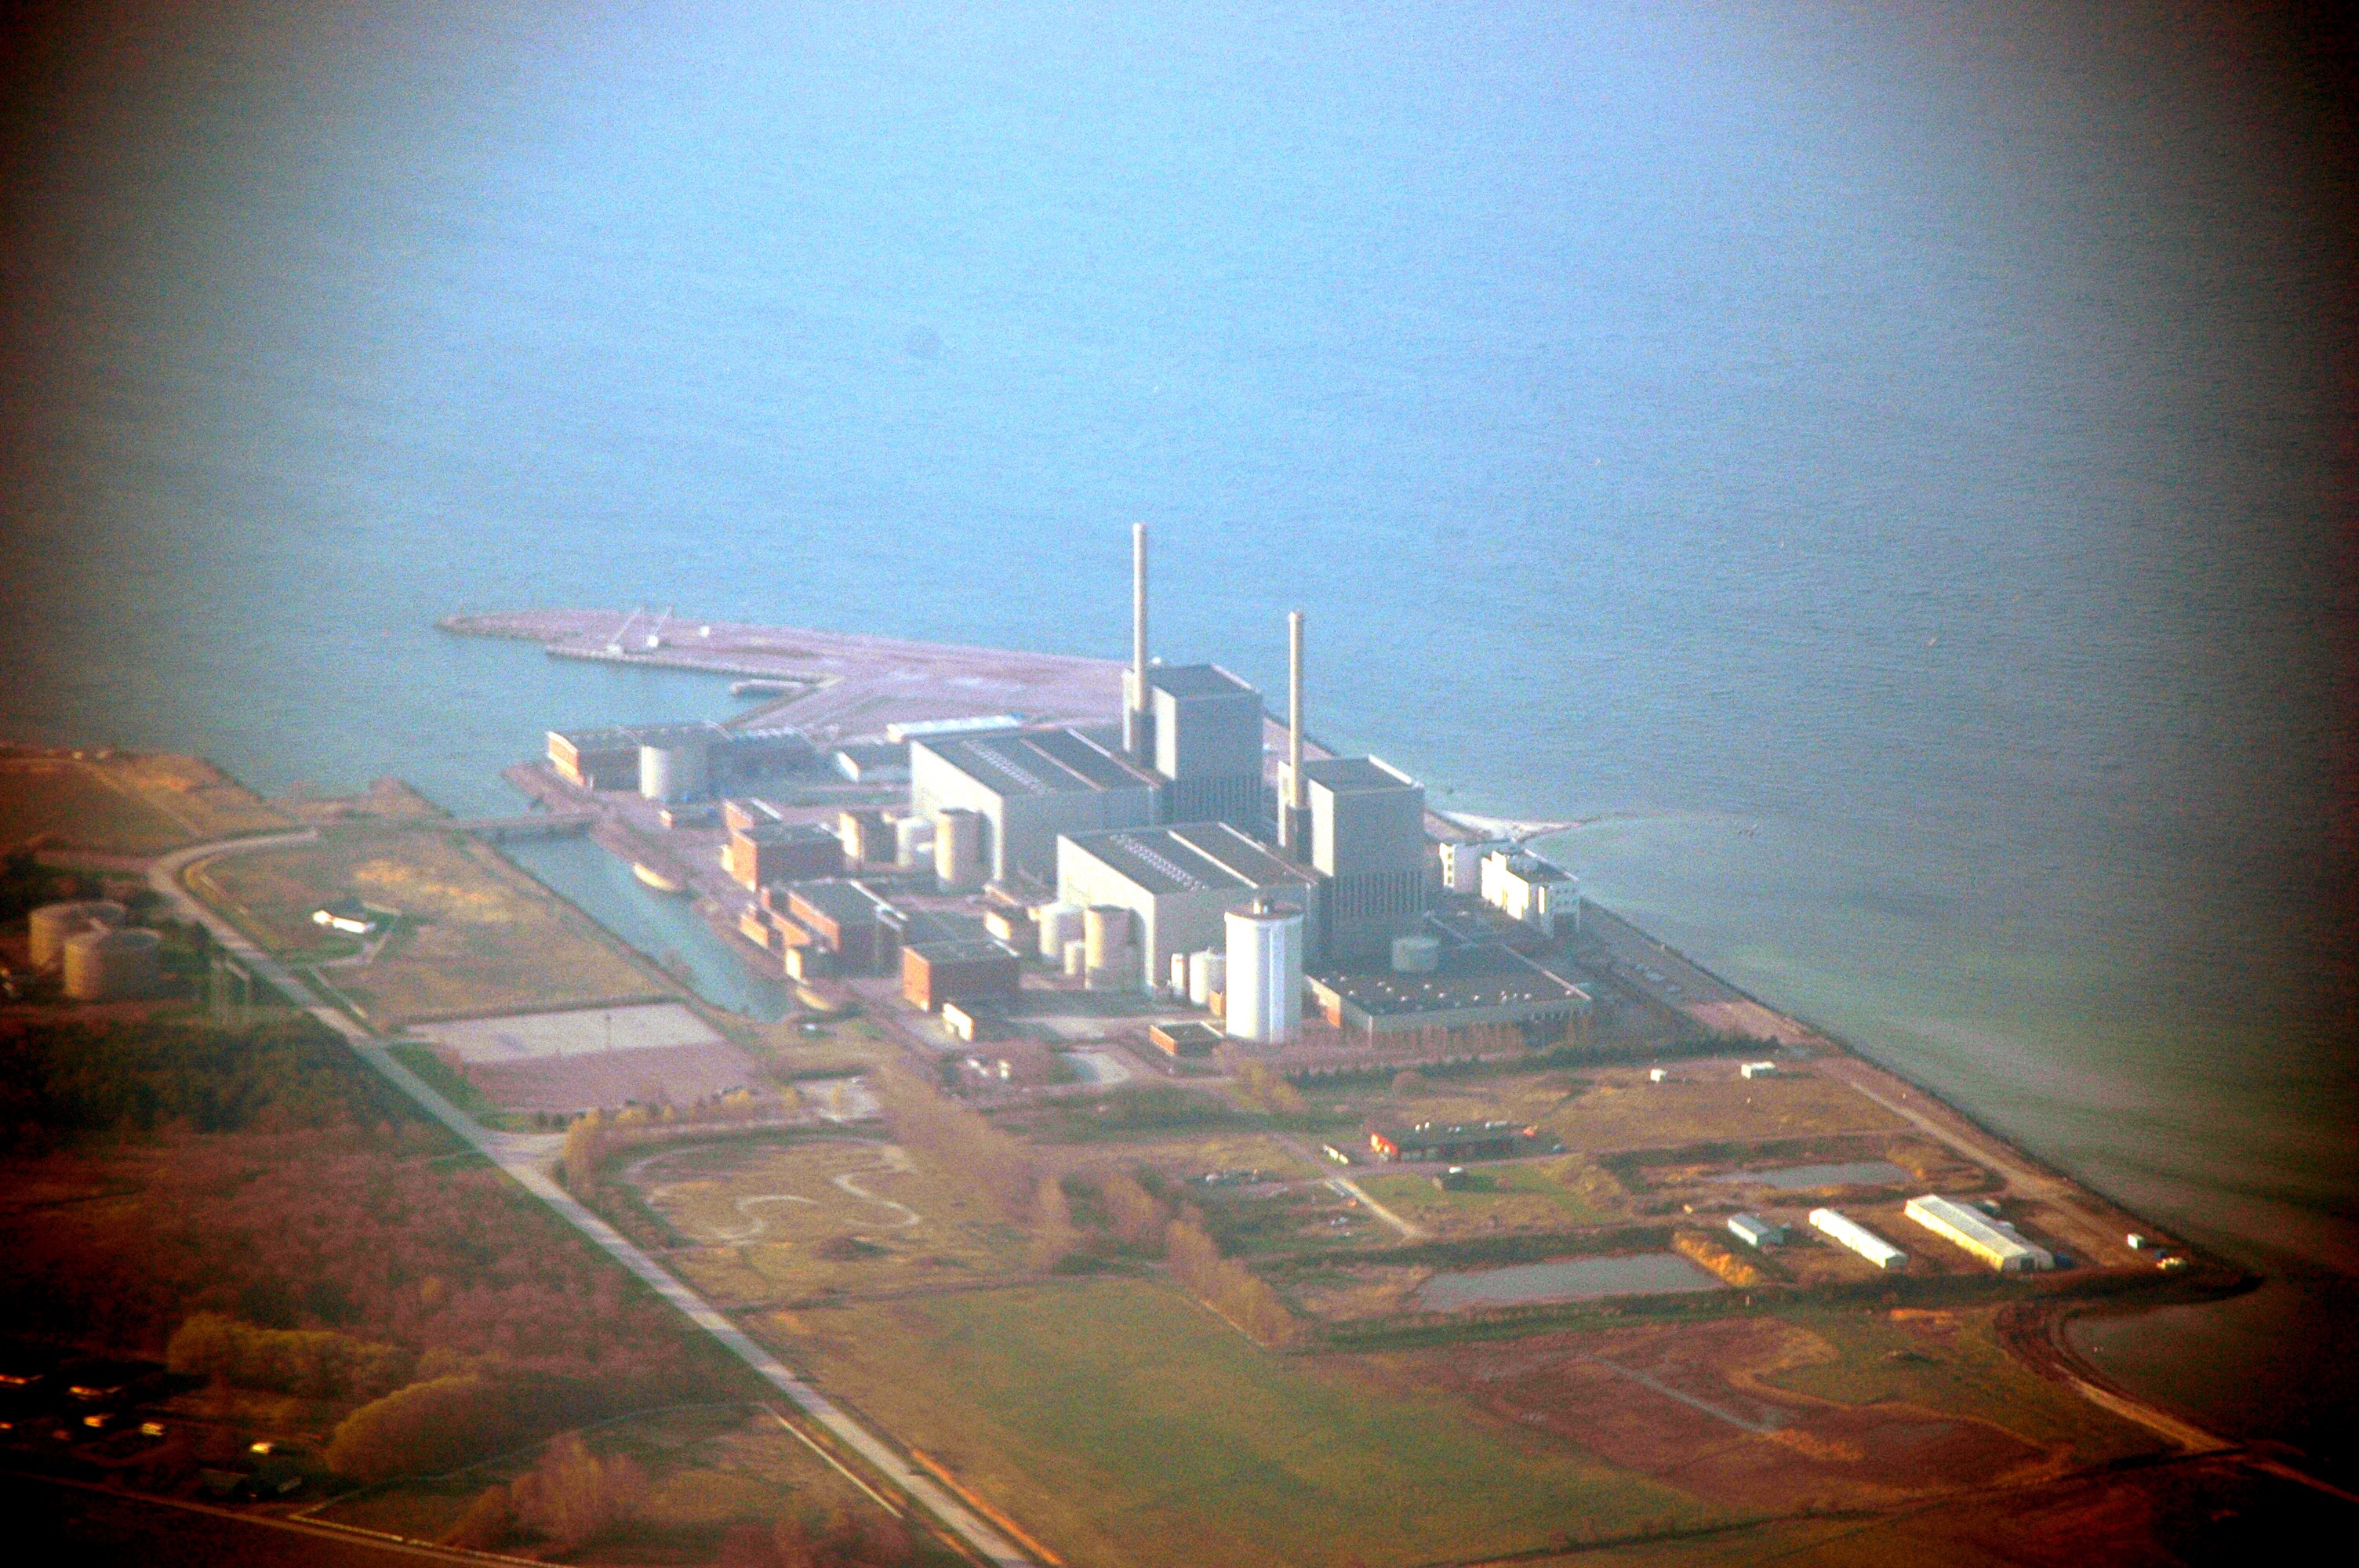 Barsebäck Nuclear Power Plant - Abandoned D(e)K(ay)